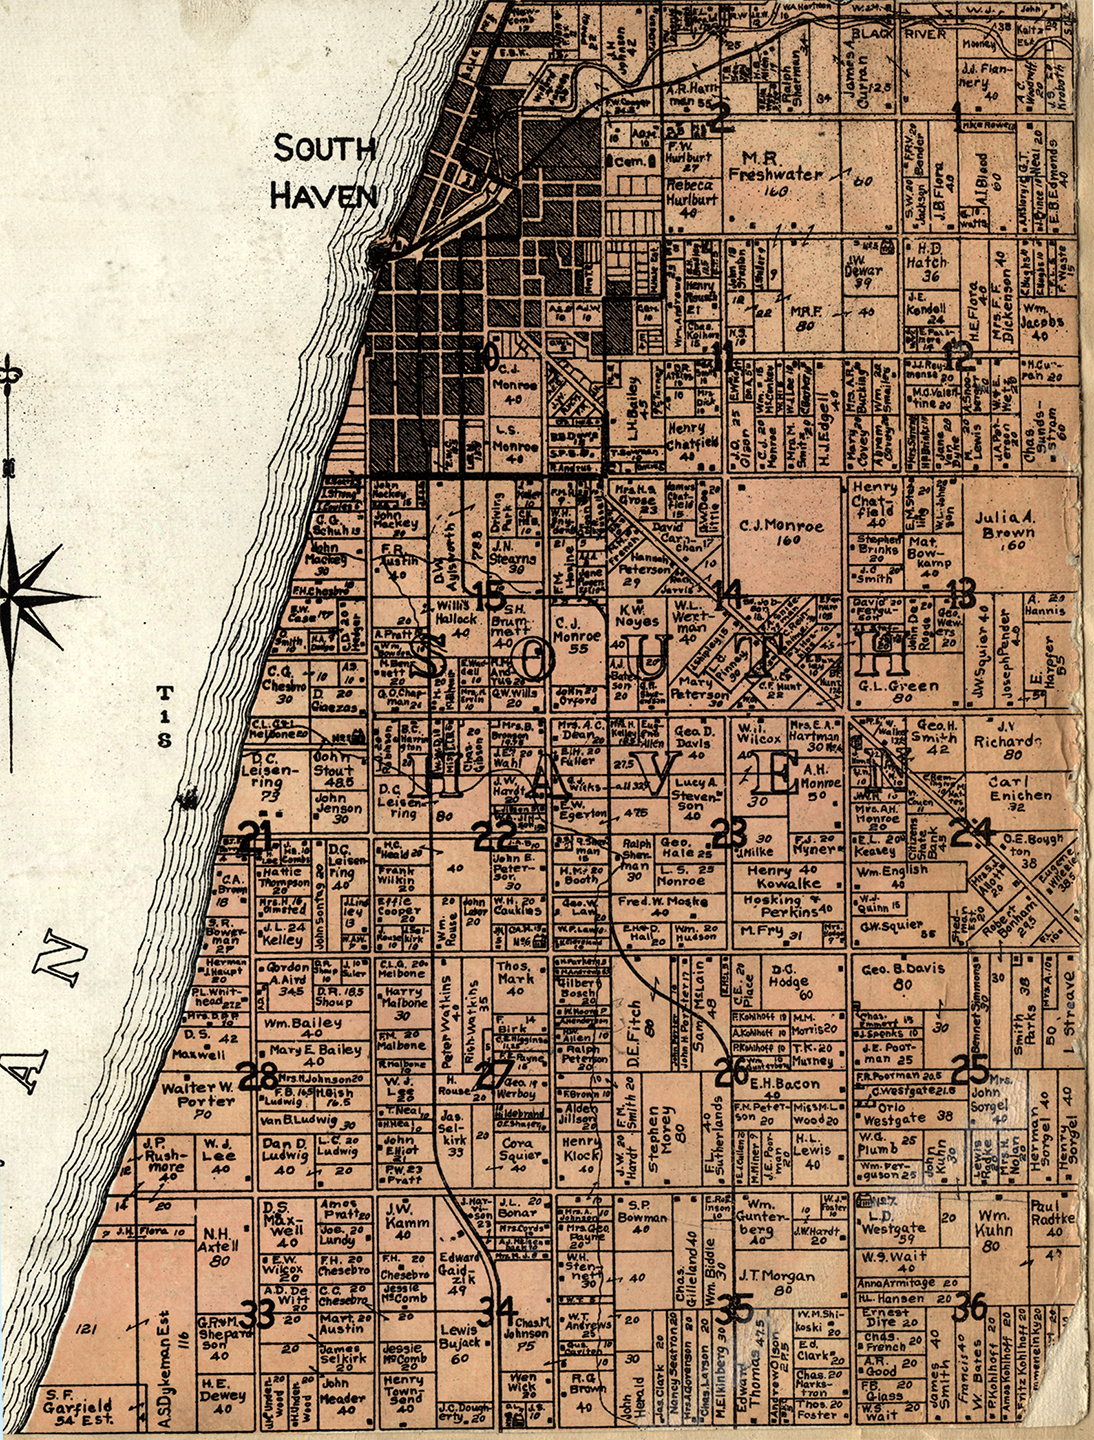 1906 South Haven Township, Michigan landownership map